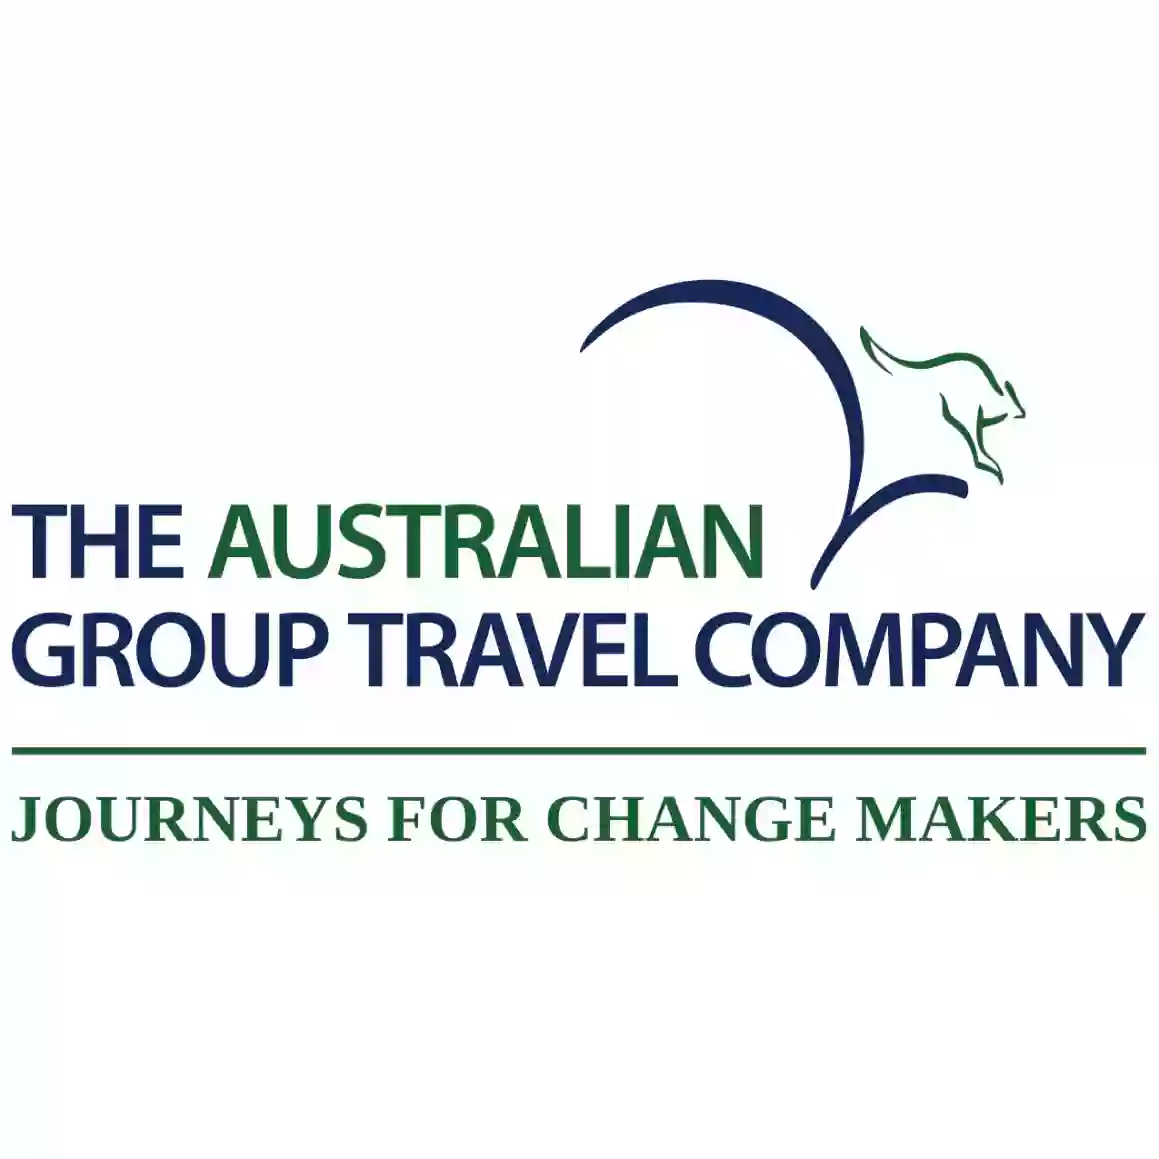 The Australian Group Travel Company